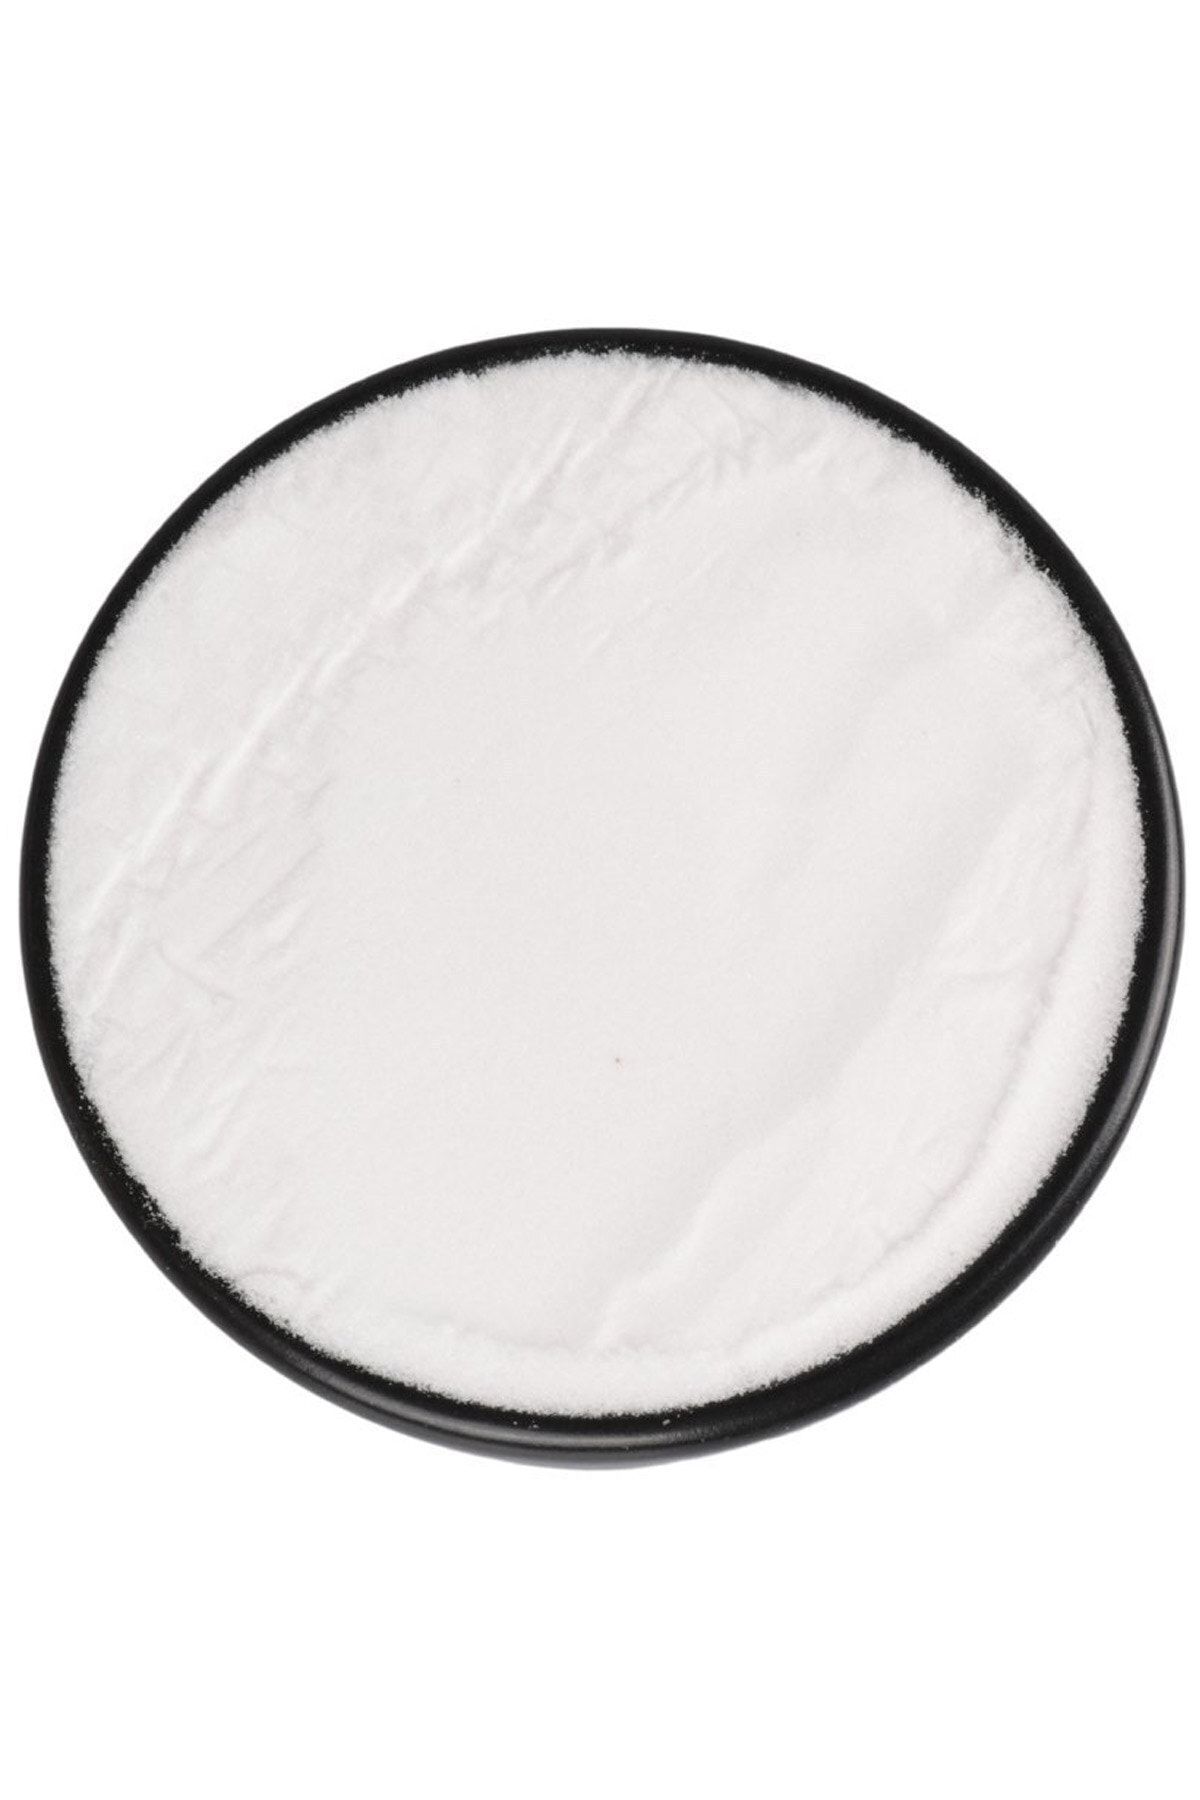 aktarix Yenilebilir Karbonat ( Sodyum Bi Karbonat ) 3 Kg